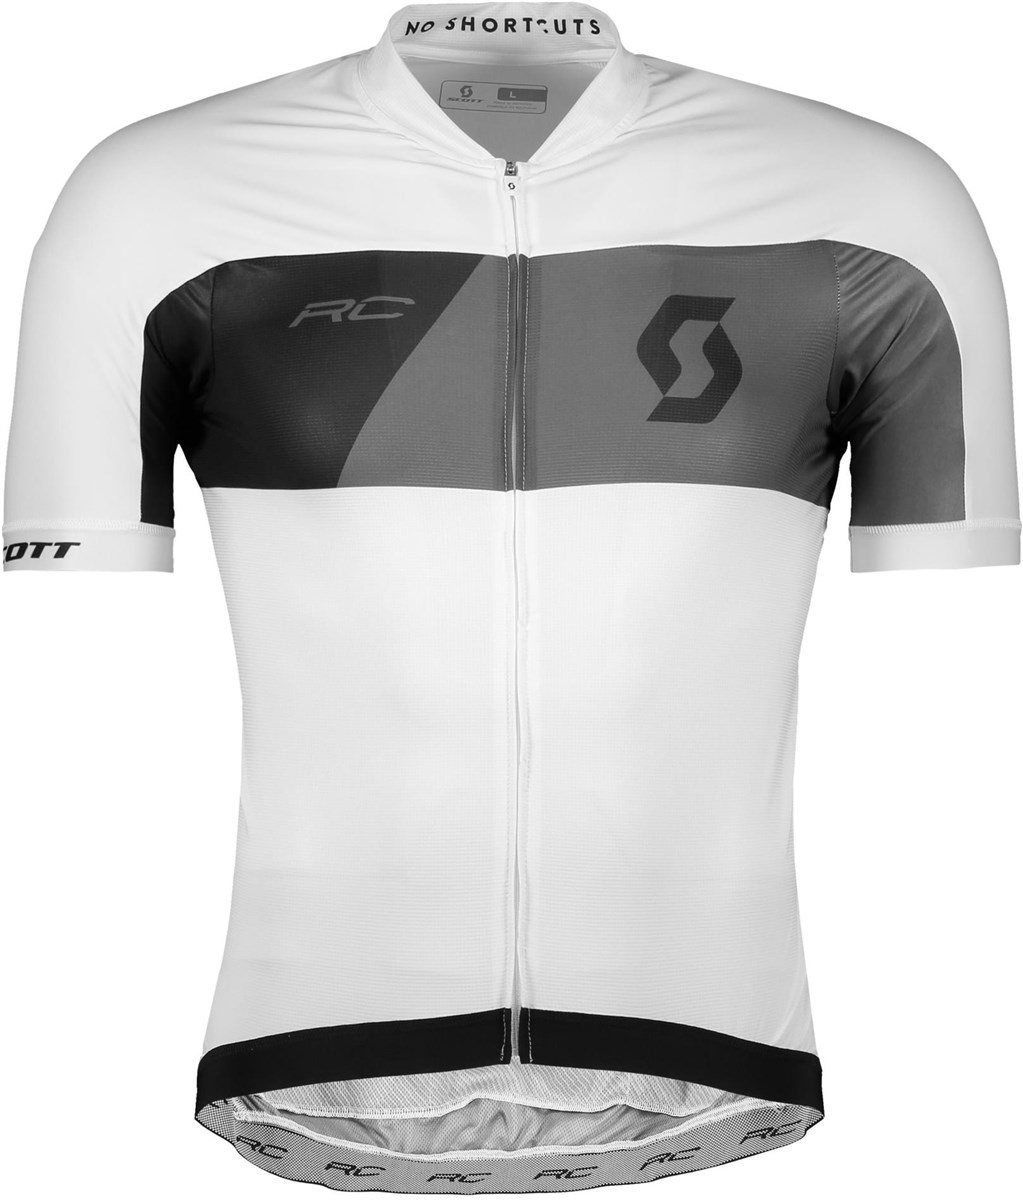 Scott RC Premium Short Sleeve Shirt / Jersey product image